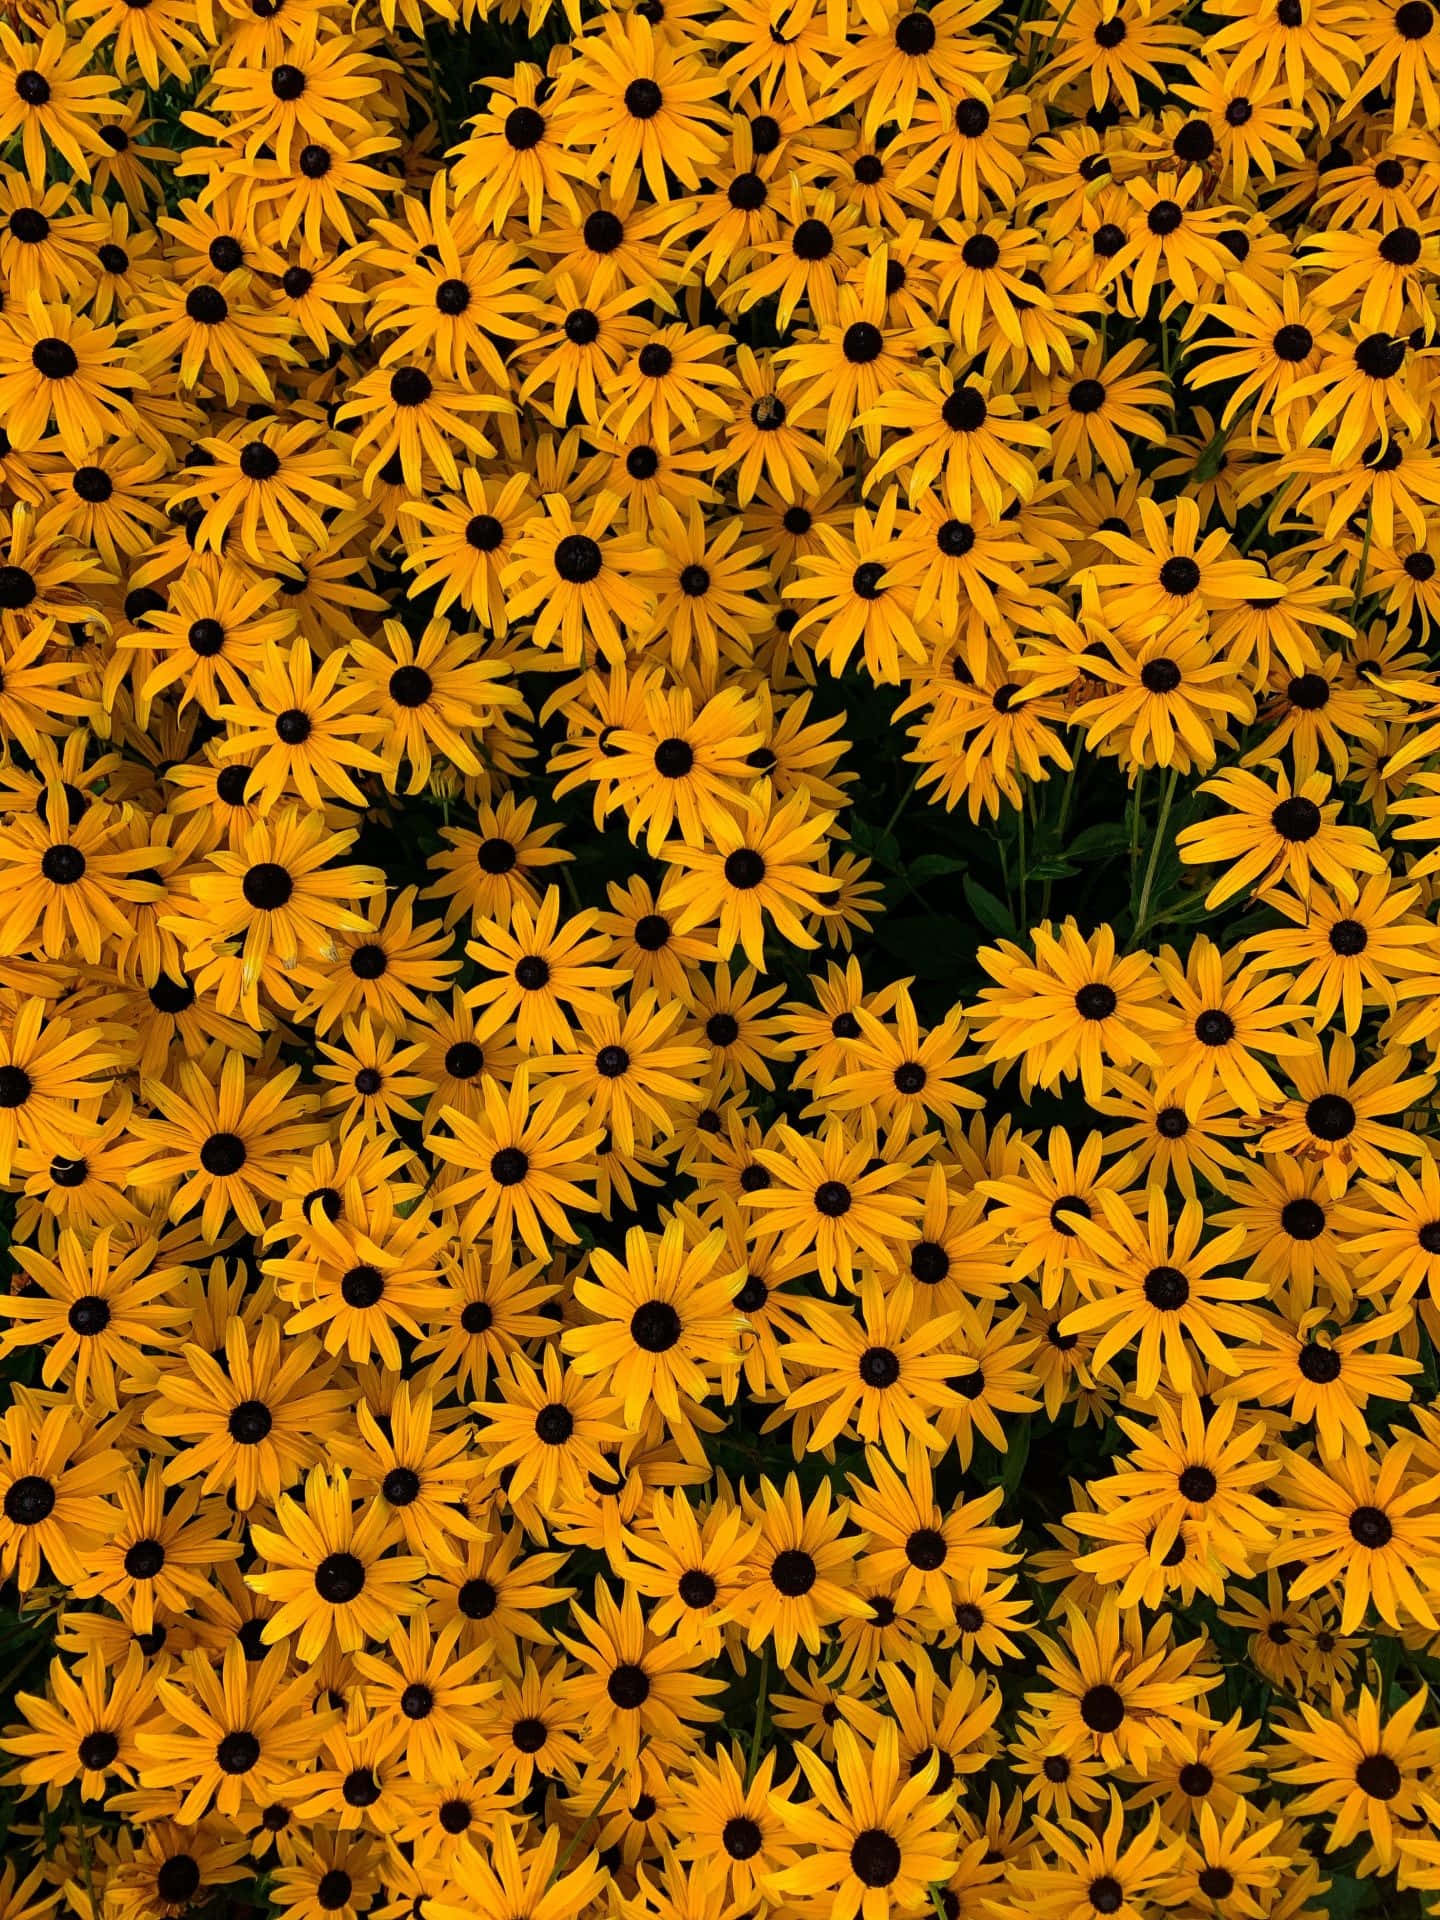 Et felt af gule blomster med sorte pletter Wallpaper